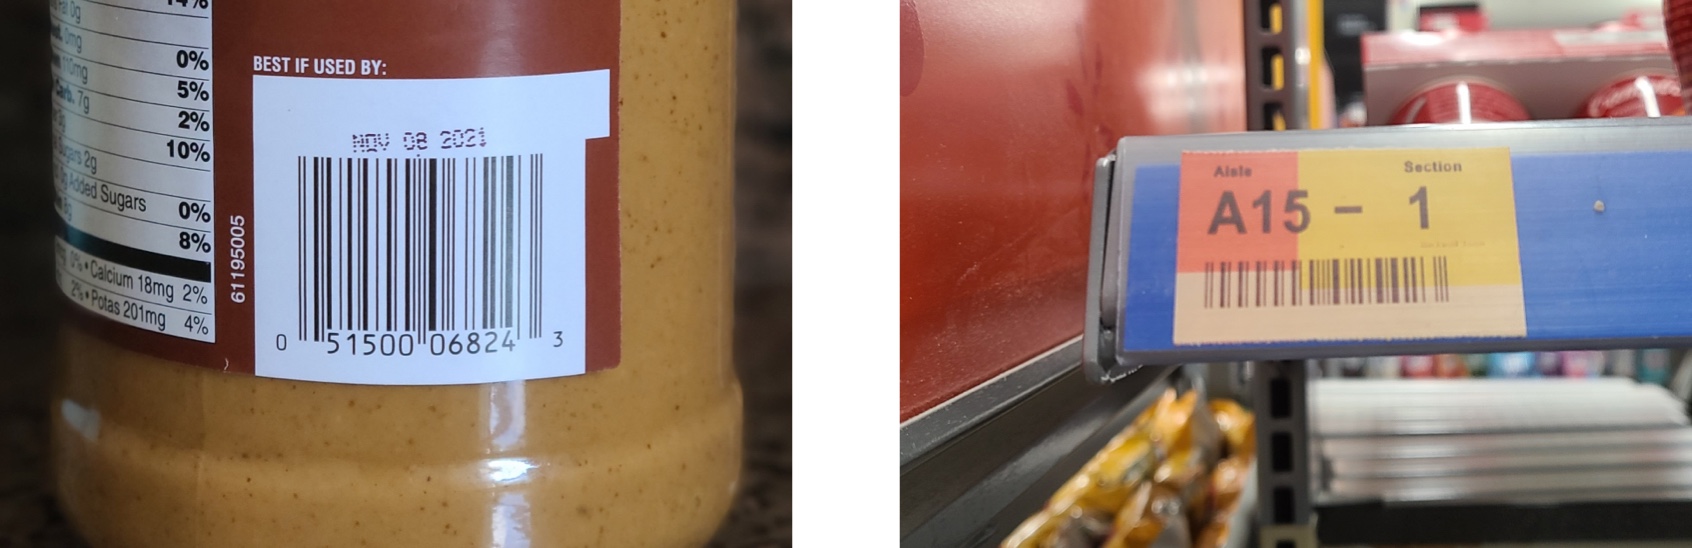 Comparison of an item barcode versus an aisle shelf location label